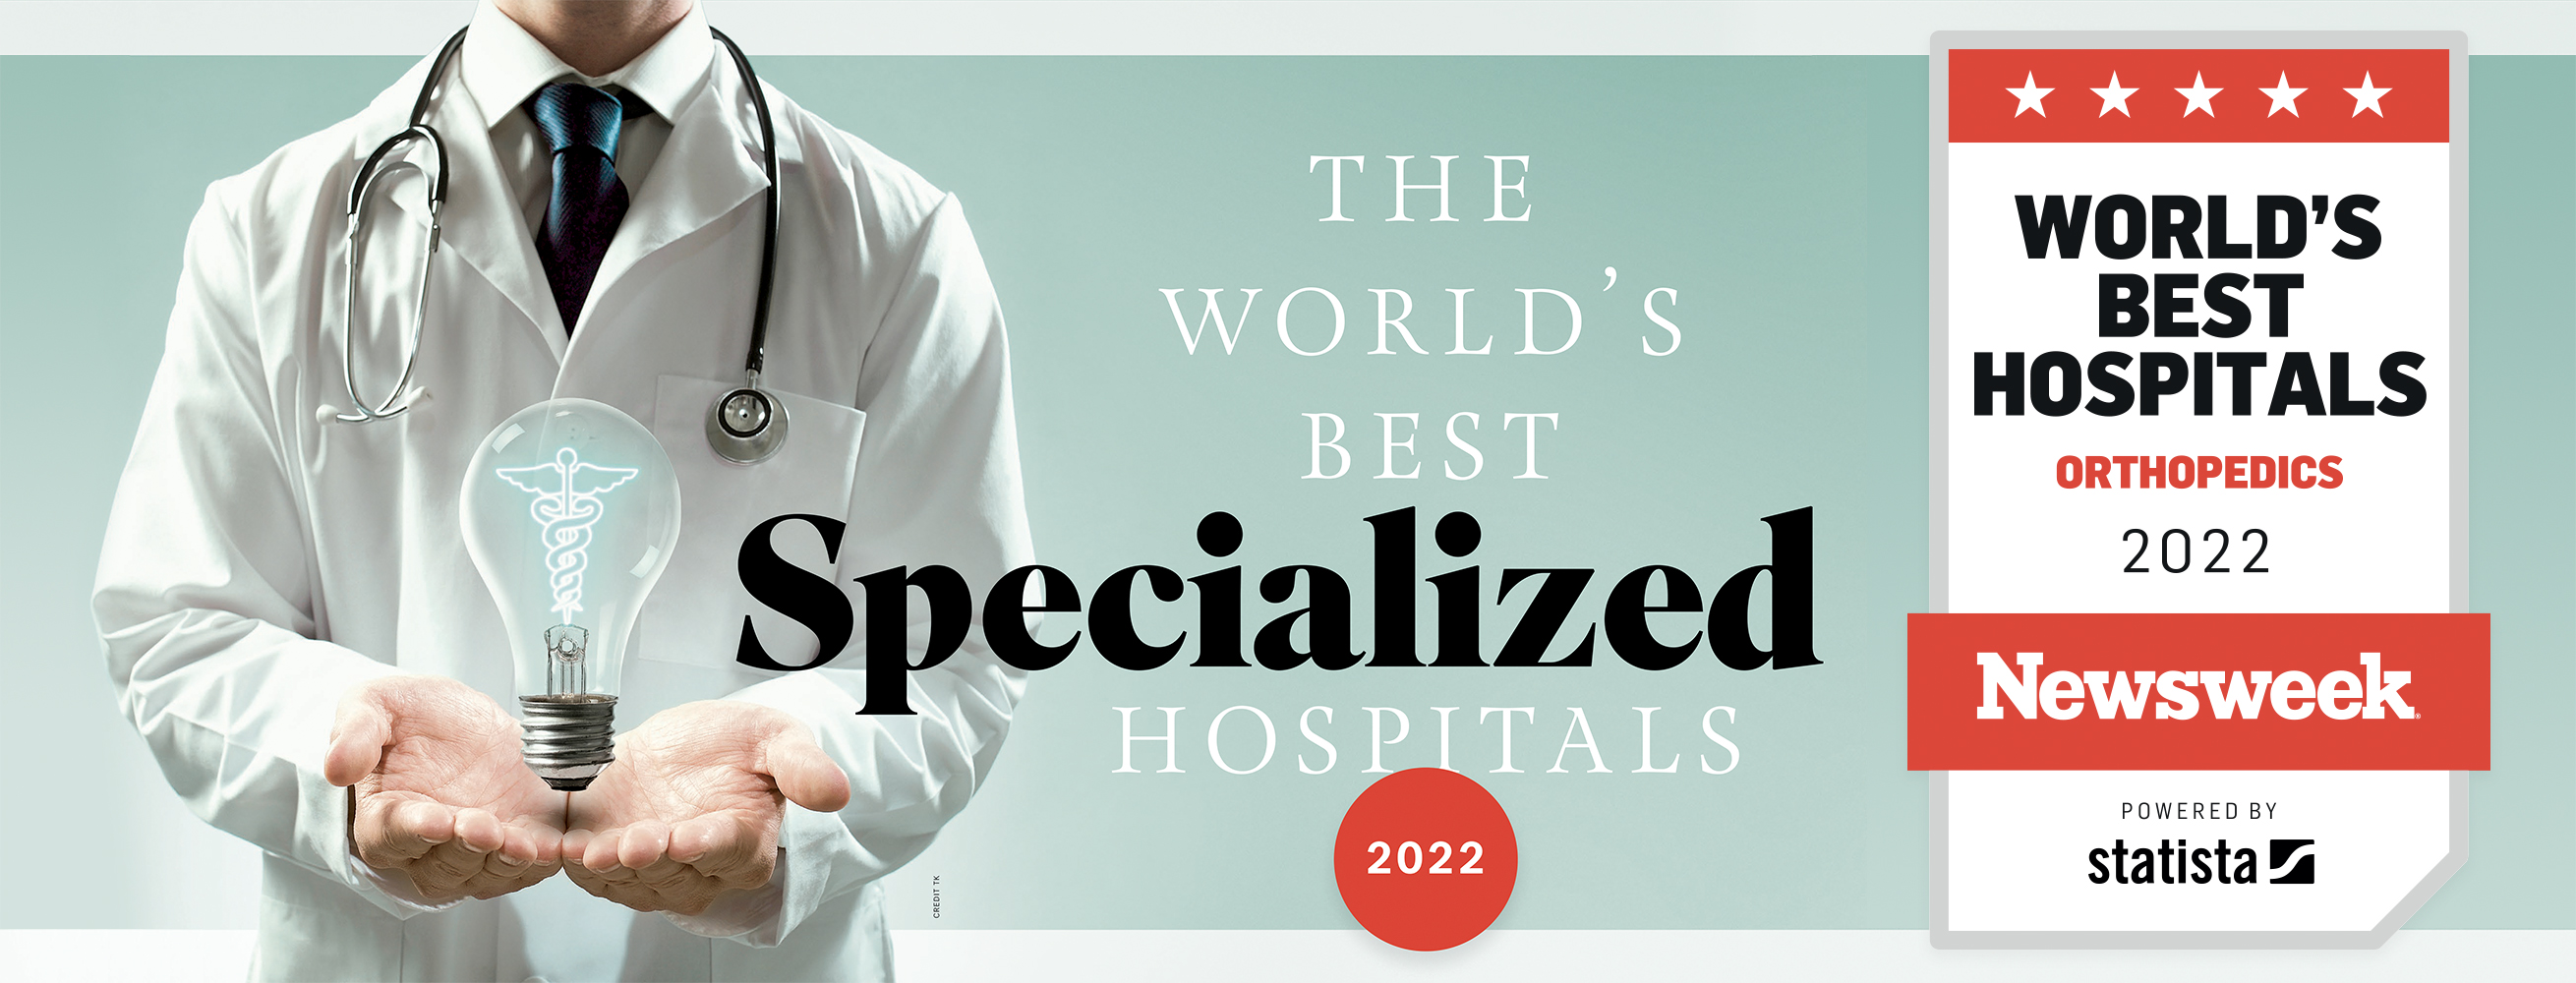 Best Specialized Hospitals 2022 - Orthopedics